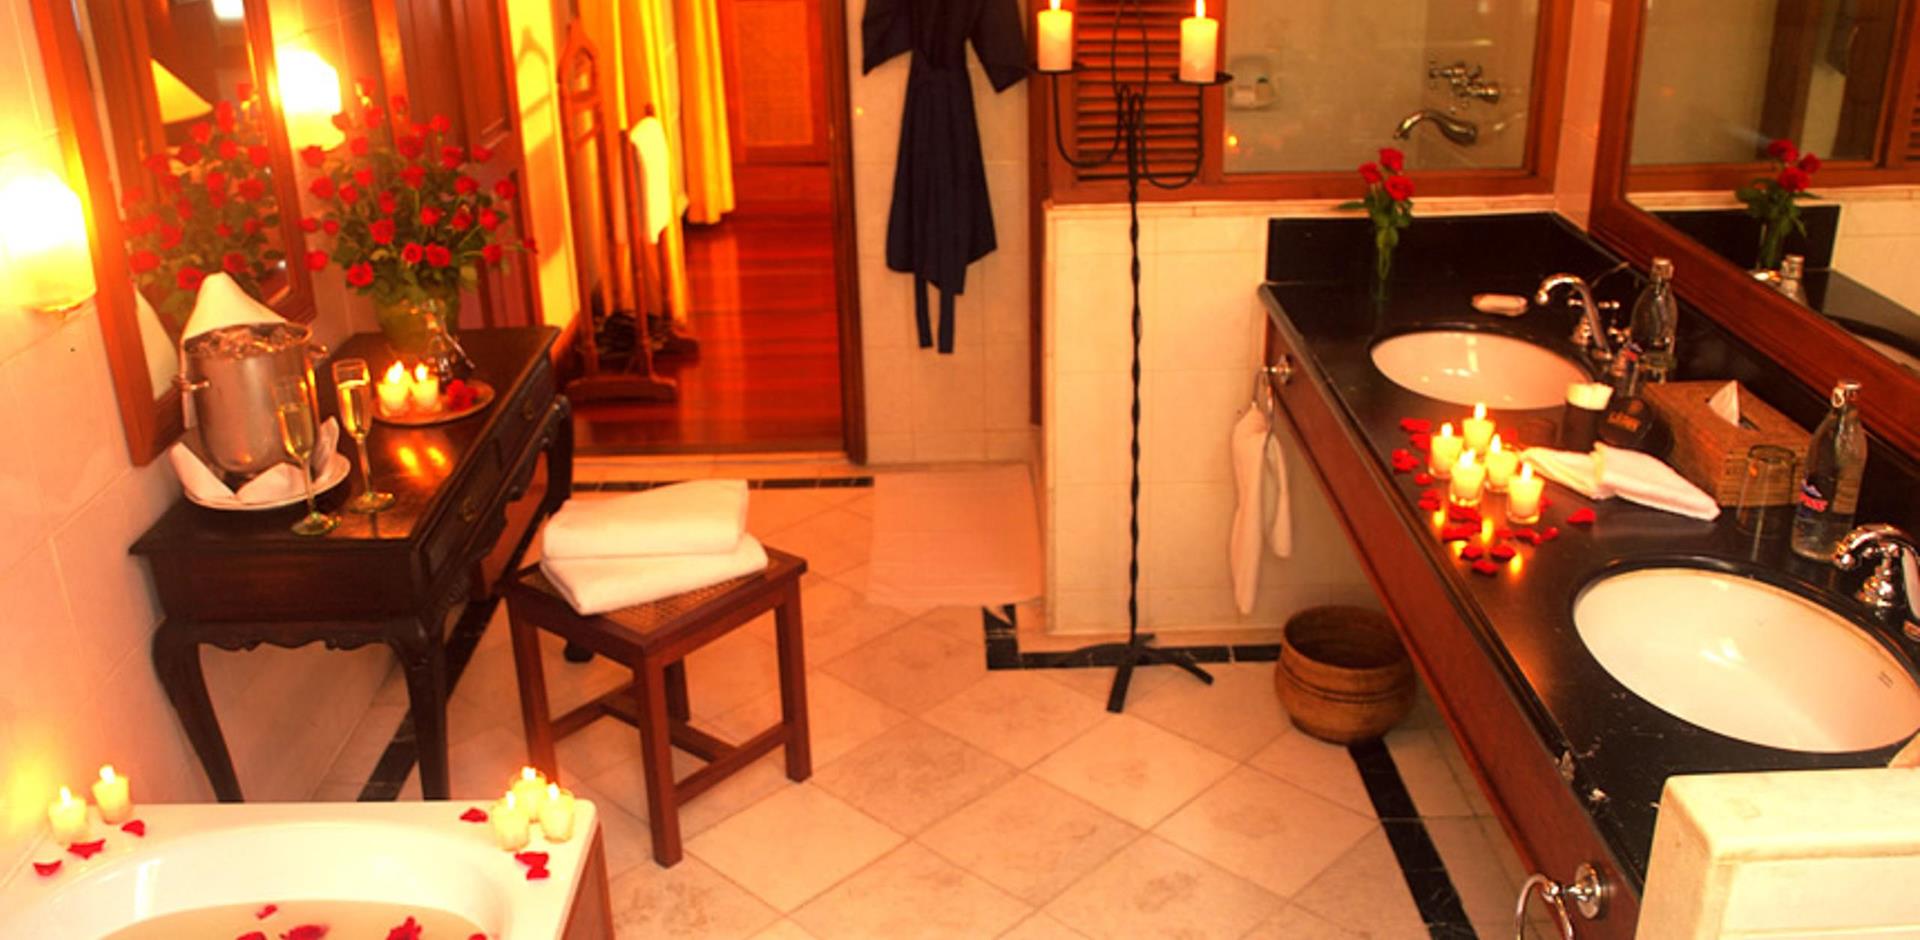 Bathroom, Savoy Hotel, Myanmar